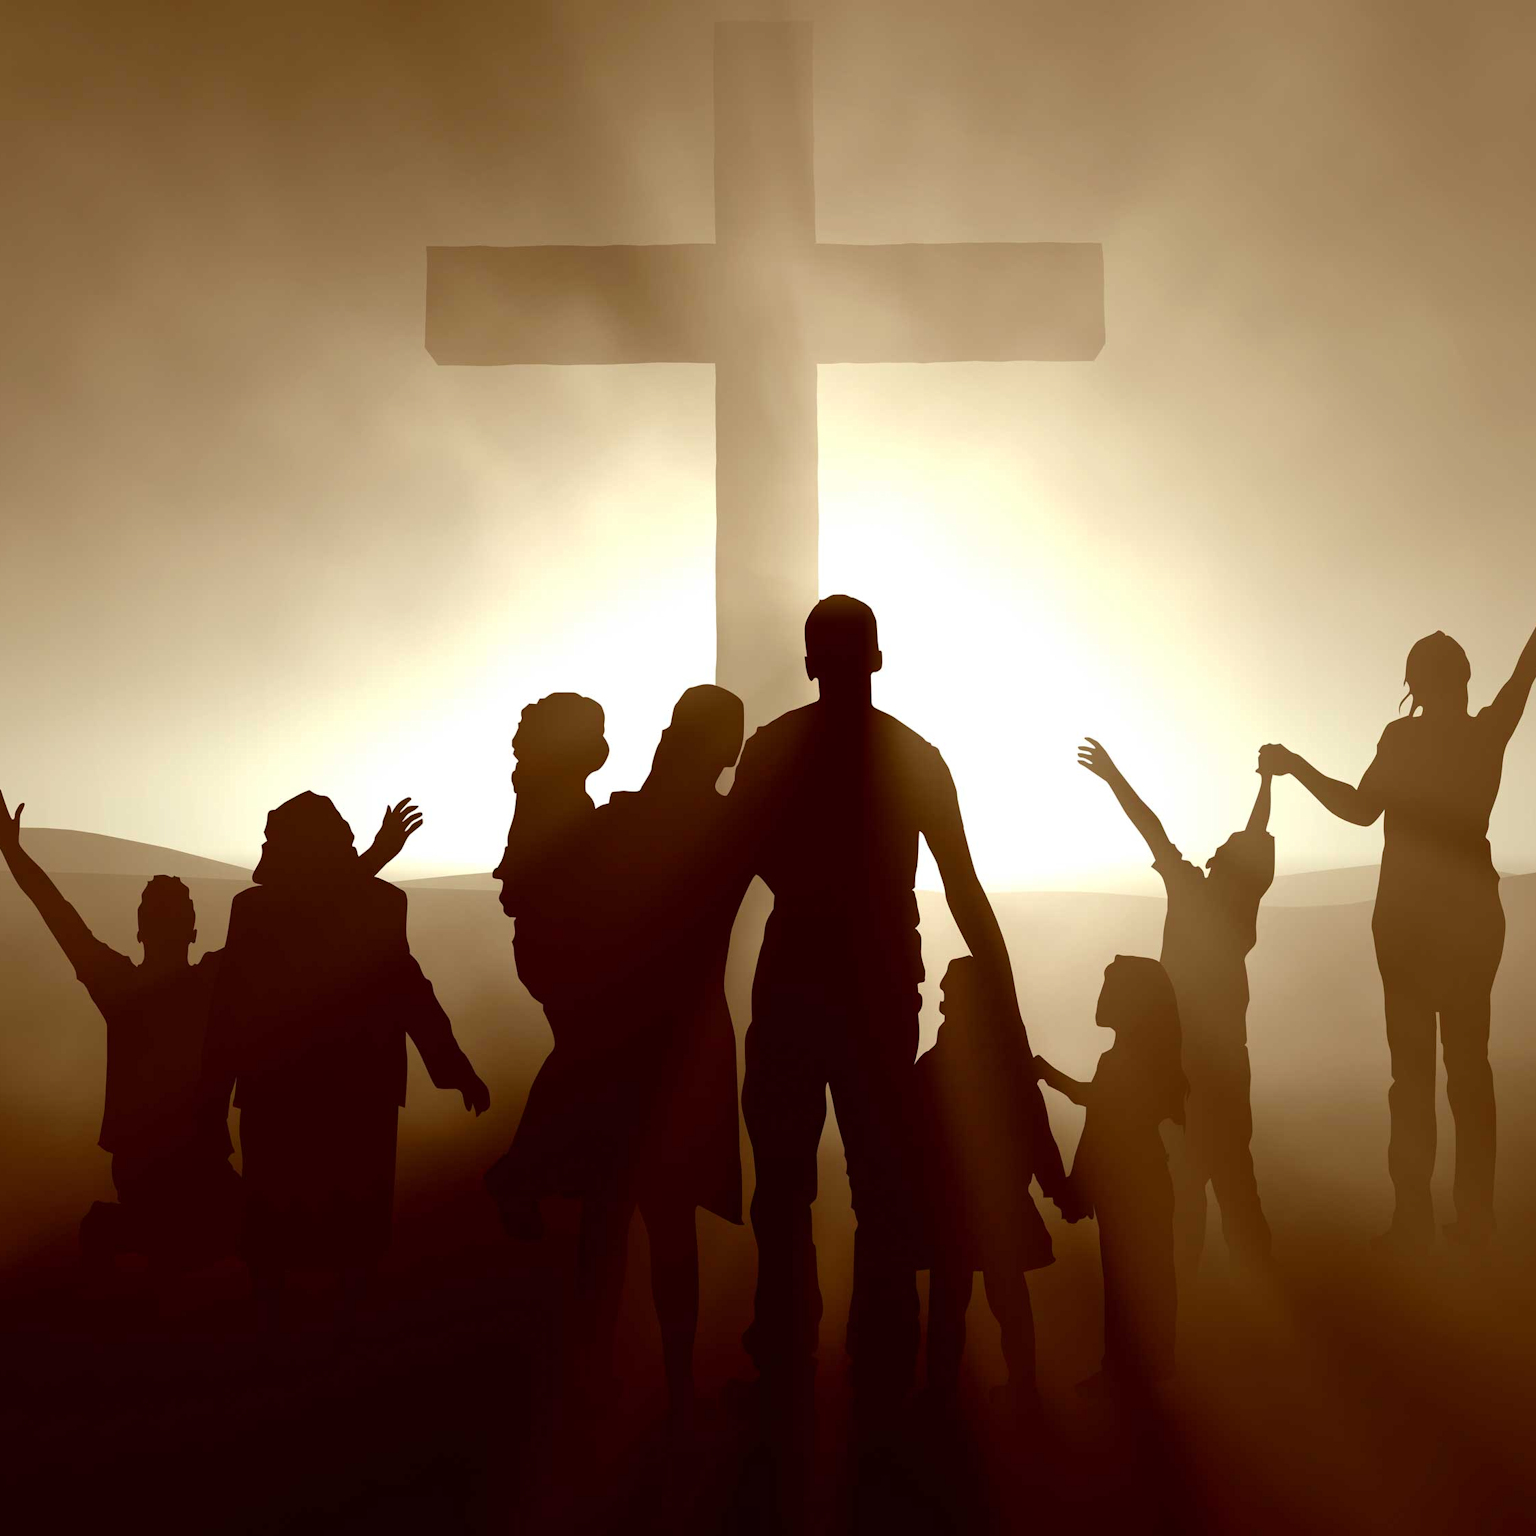 People gathered around a cross